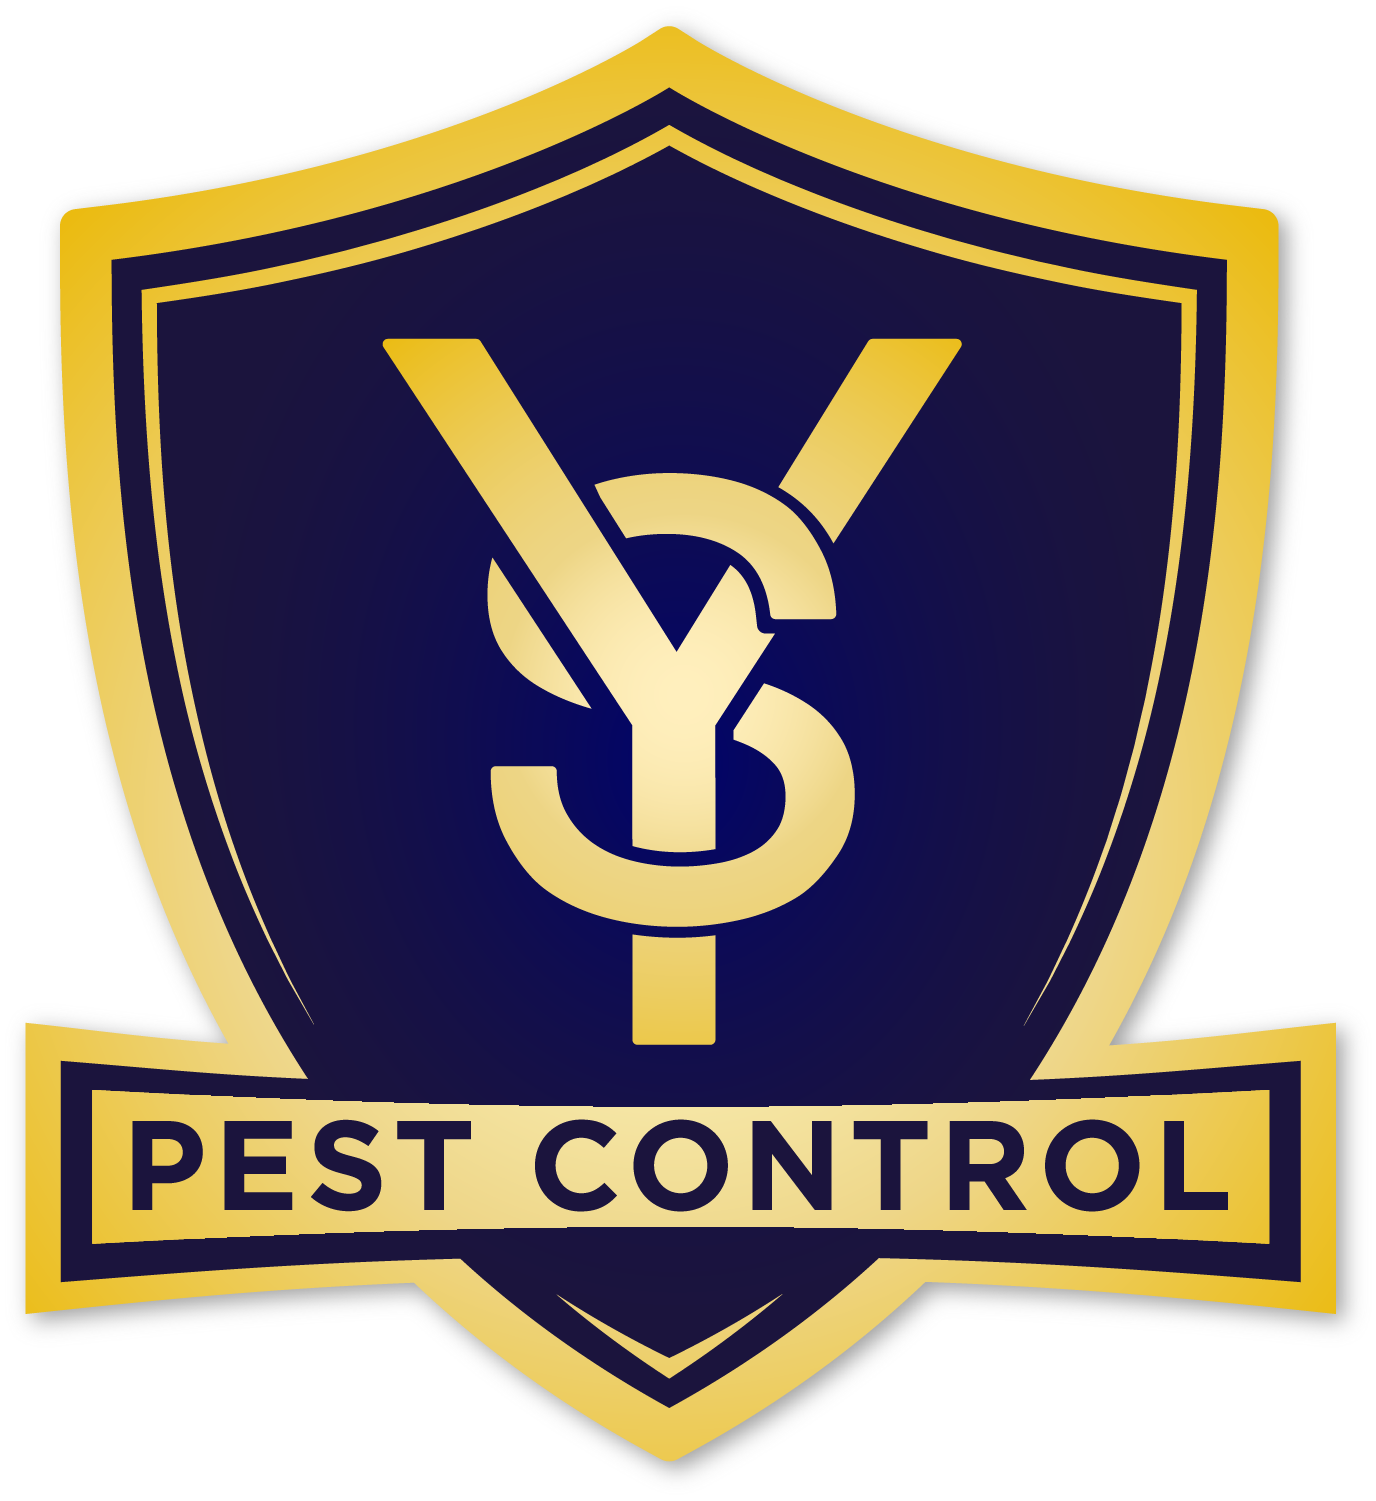 Y's Pest Control